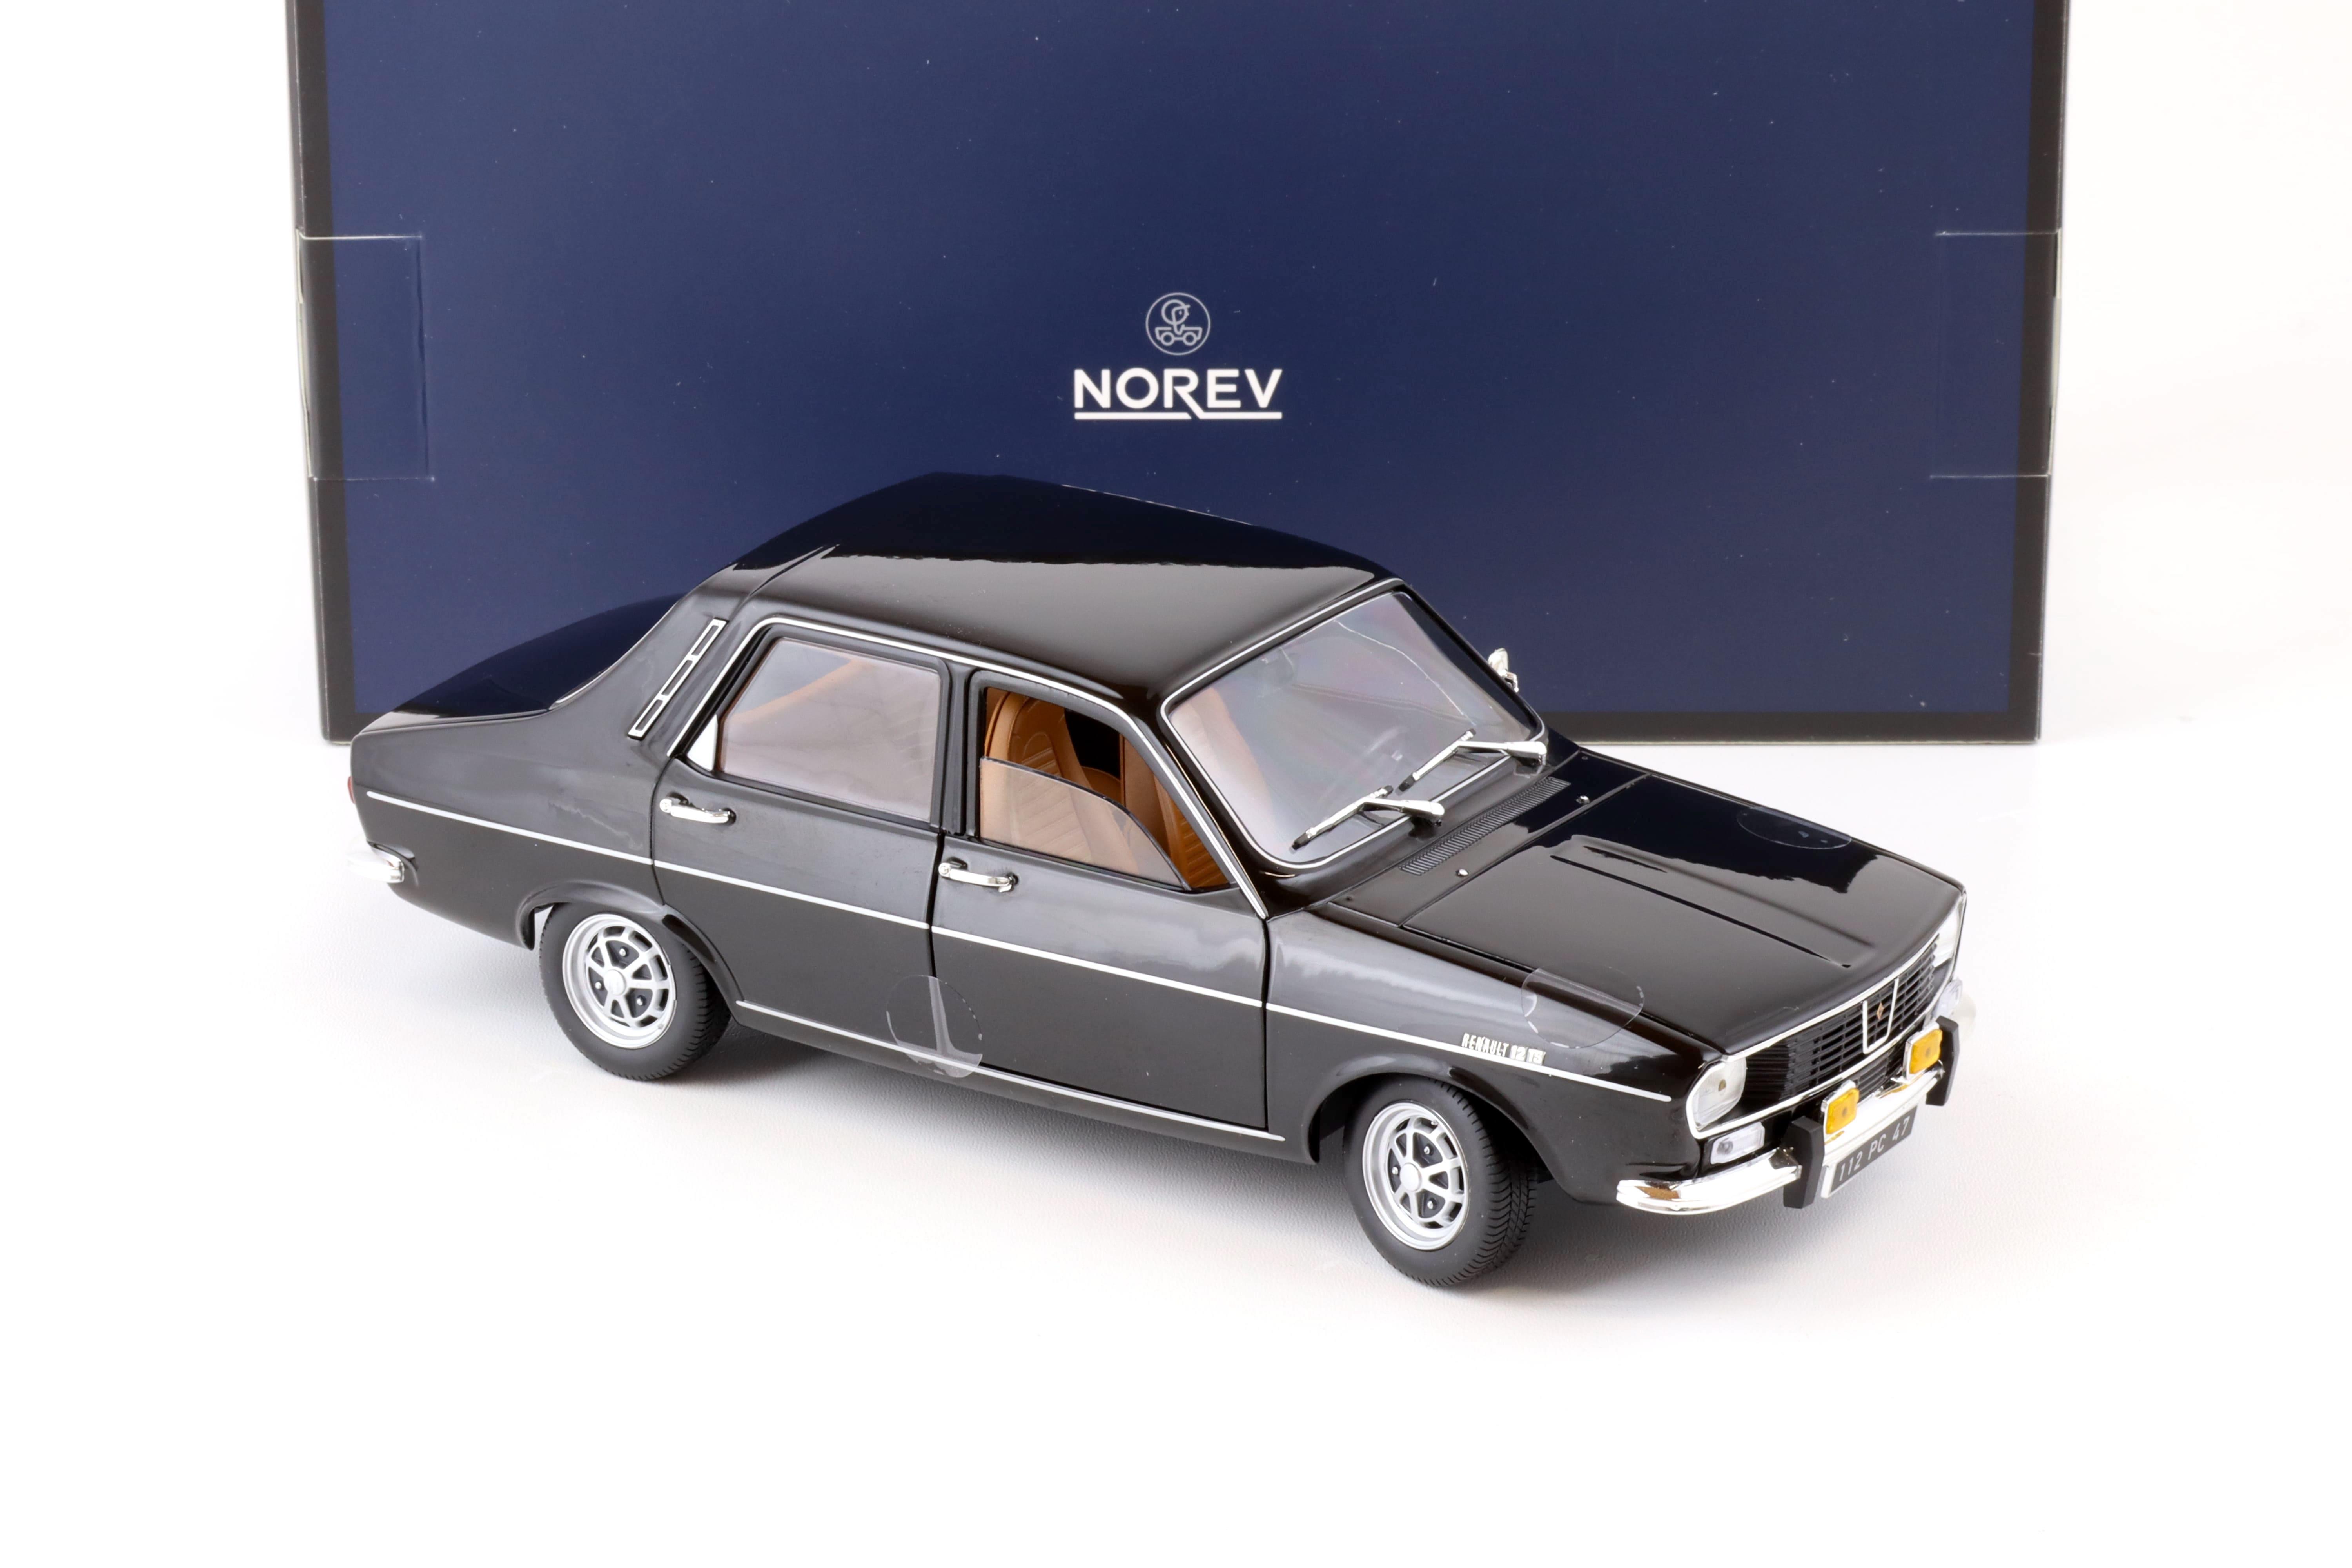 1:18 Norev Renault 12 TS 1973 black - Limited 400 pcs.